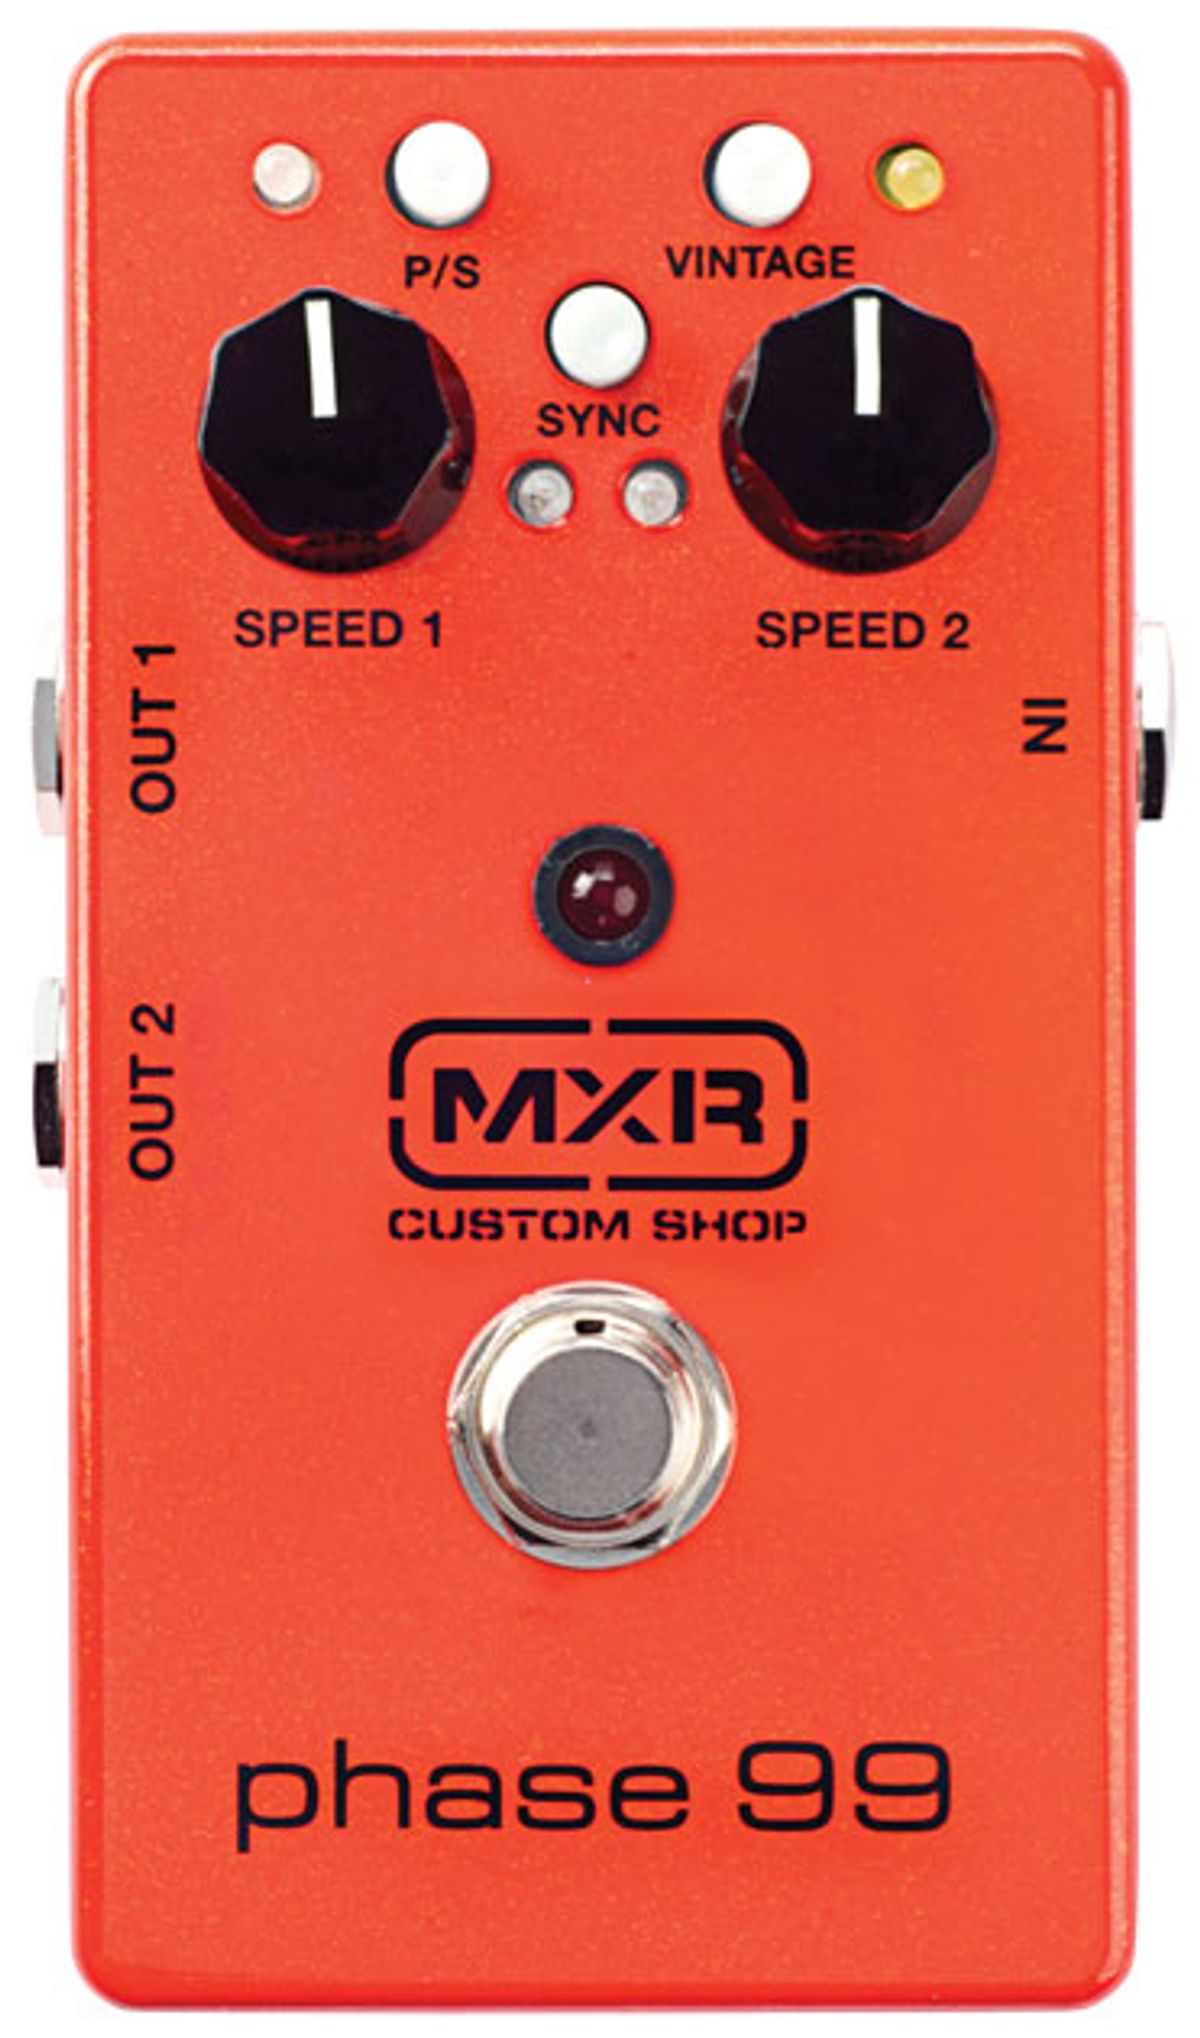 MXR Custom Shop Phase 99 Review